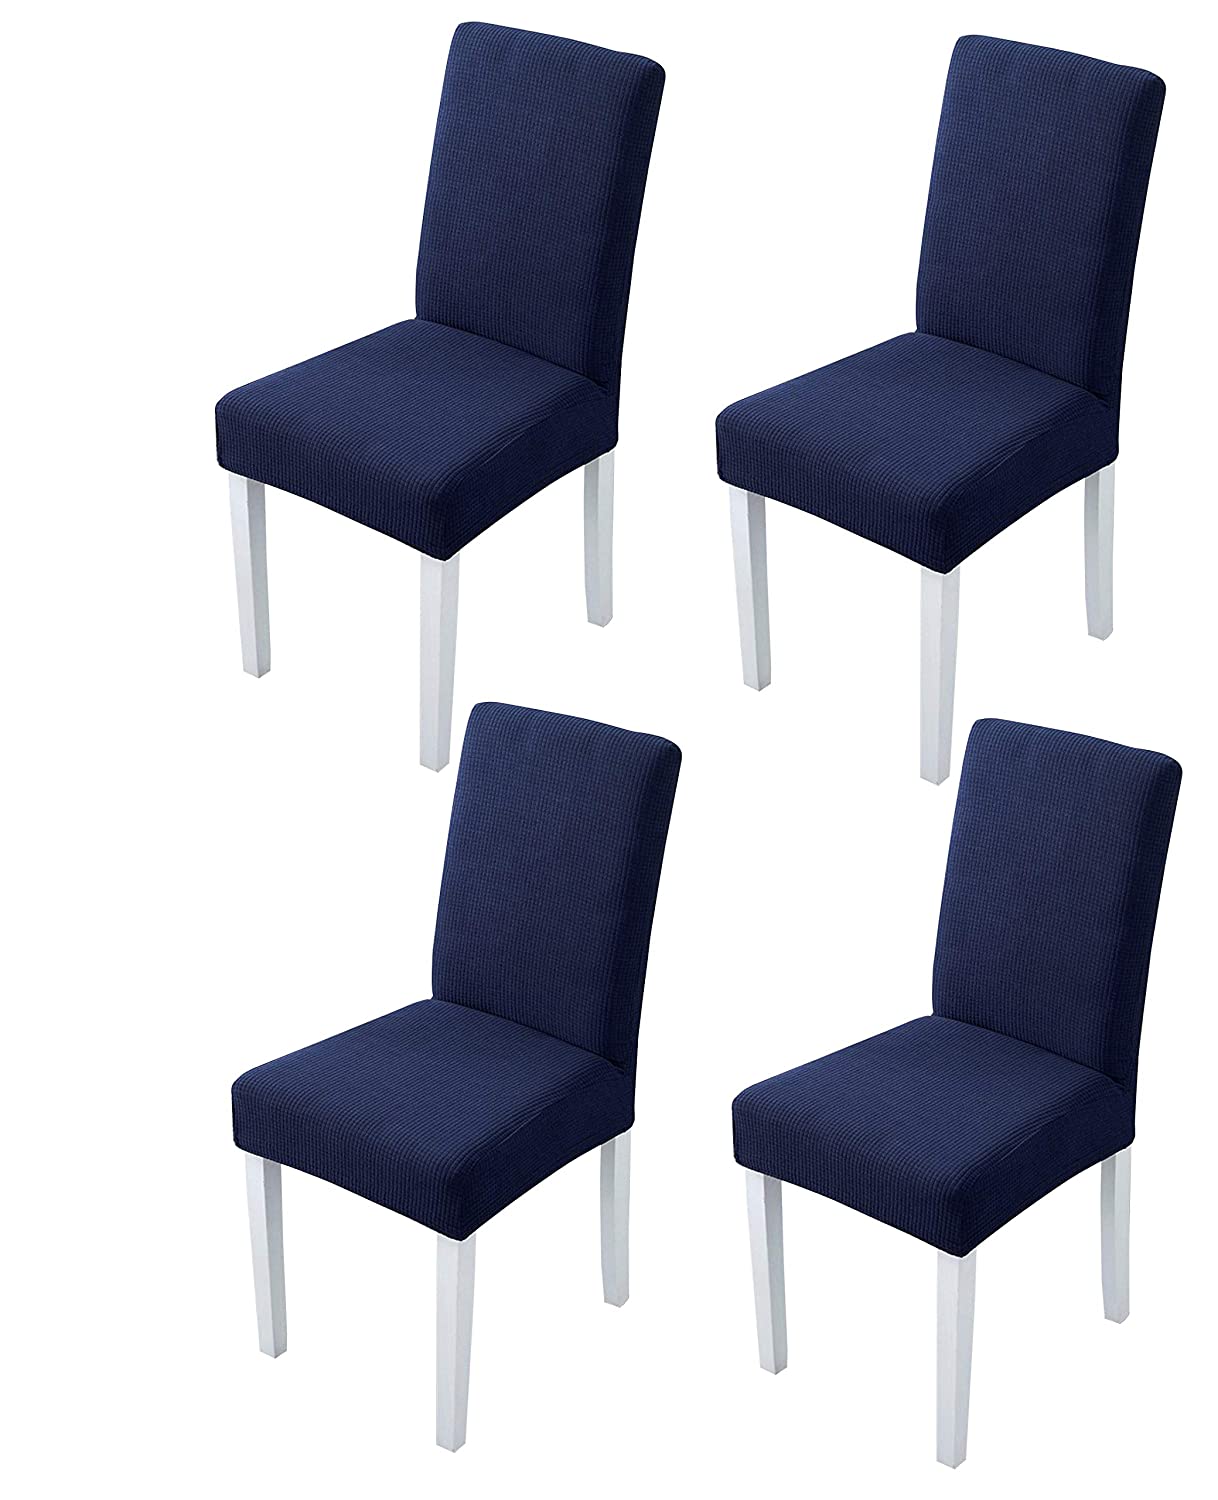 Elastic Chair Cover -Thicken Dark Blue